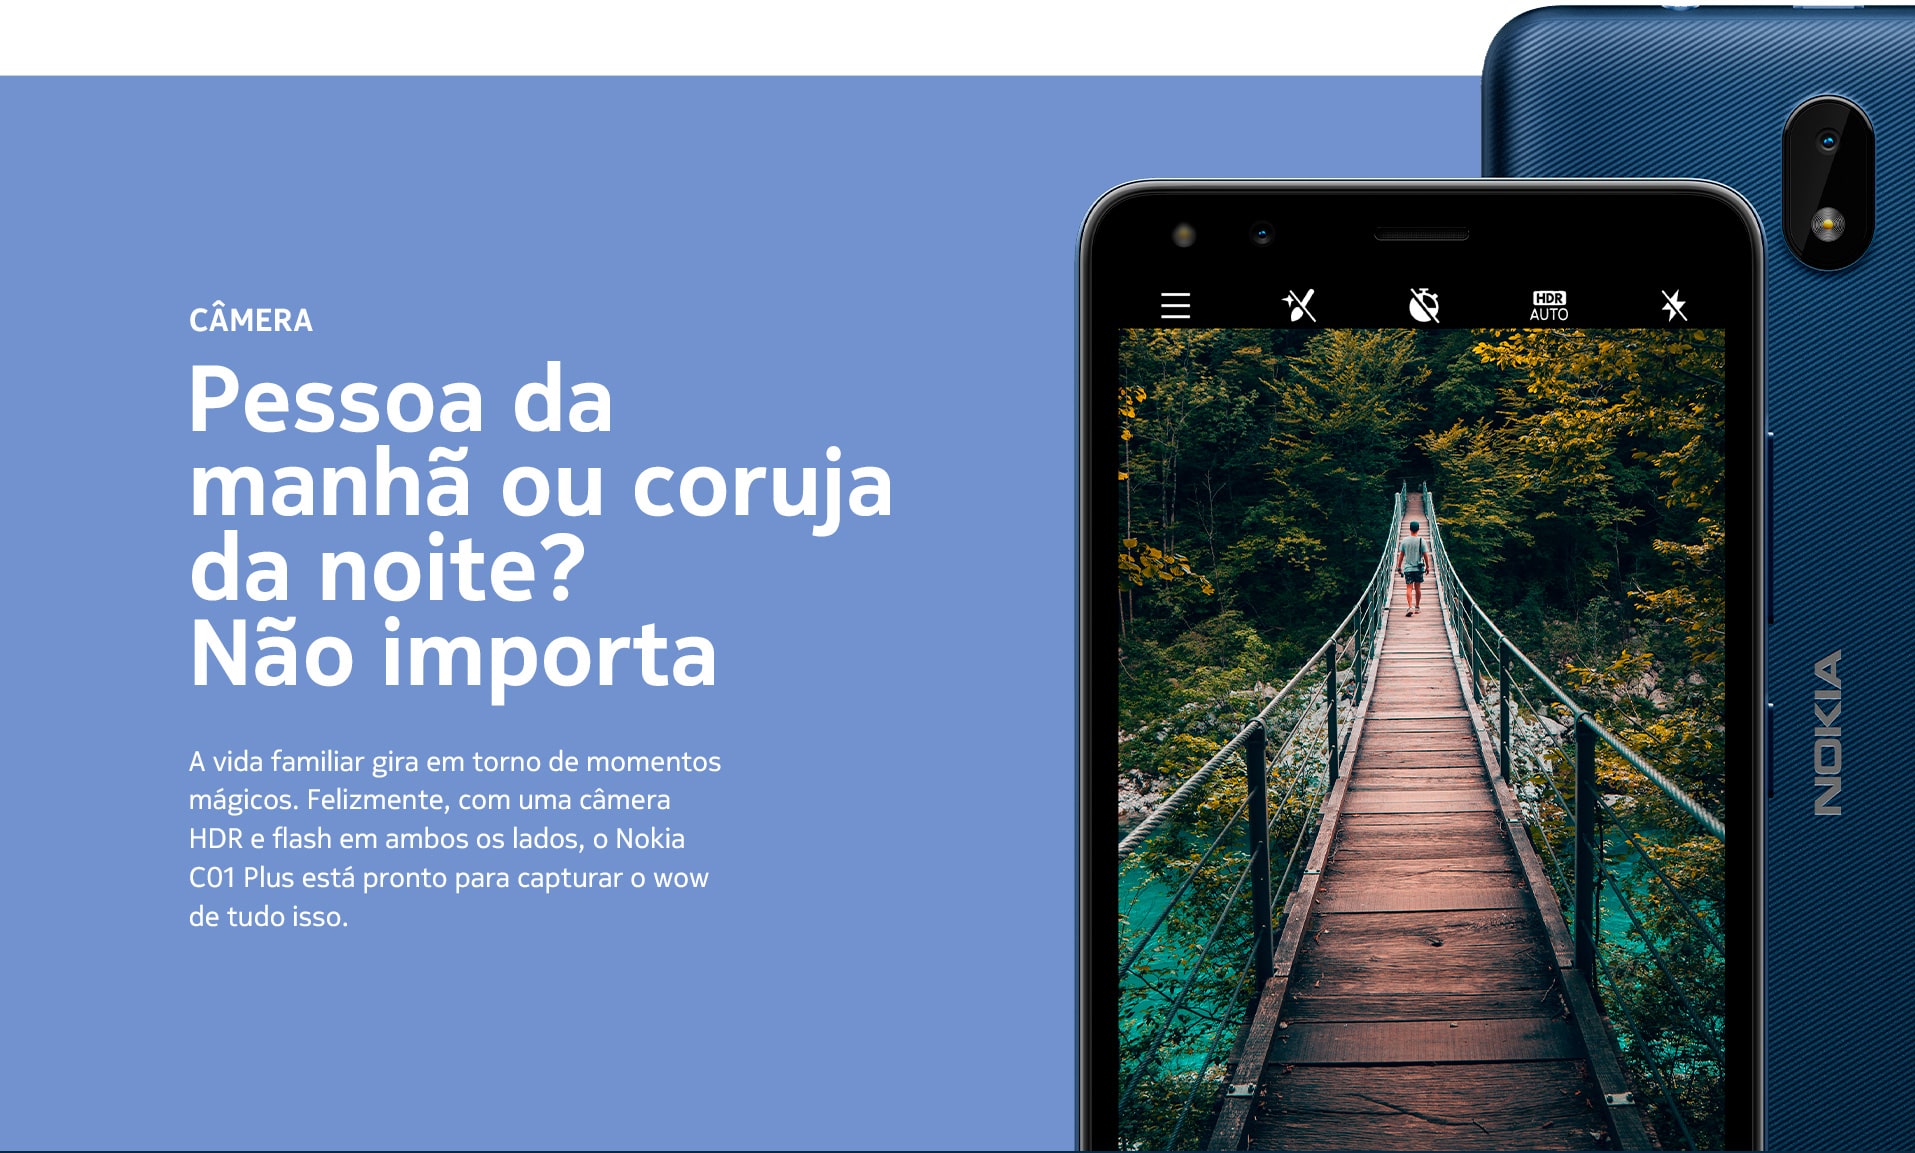 martphone Nokia C01 Plus 32GB, 4G, Tela 5.45”, Dual Chip, 1GB RAM, Câmera 5.0MP + Selfie 5.0MP Azul- NK040